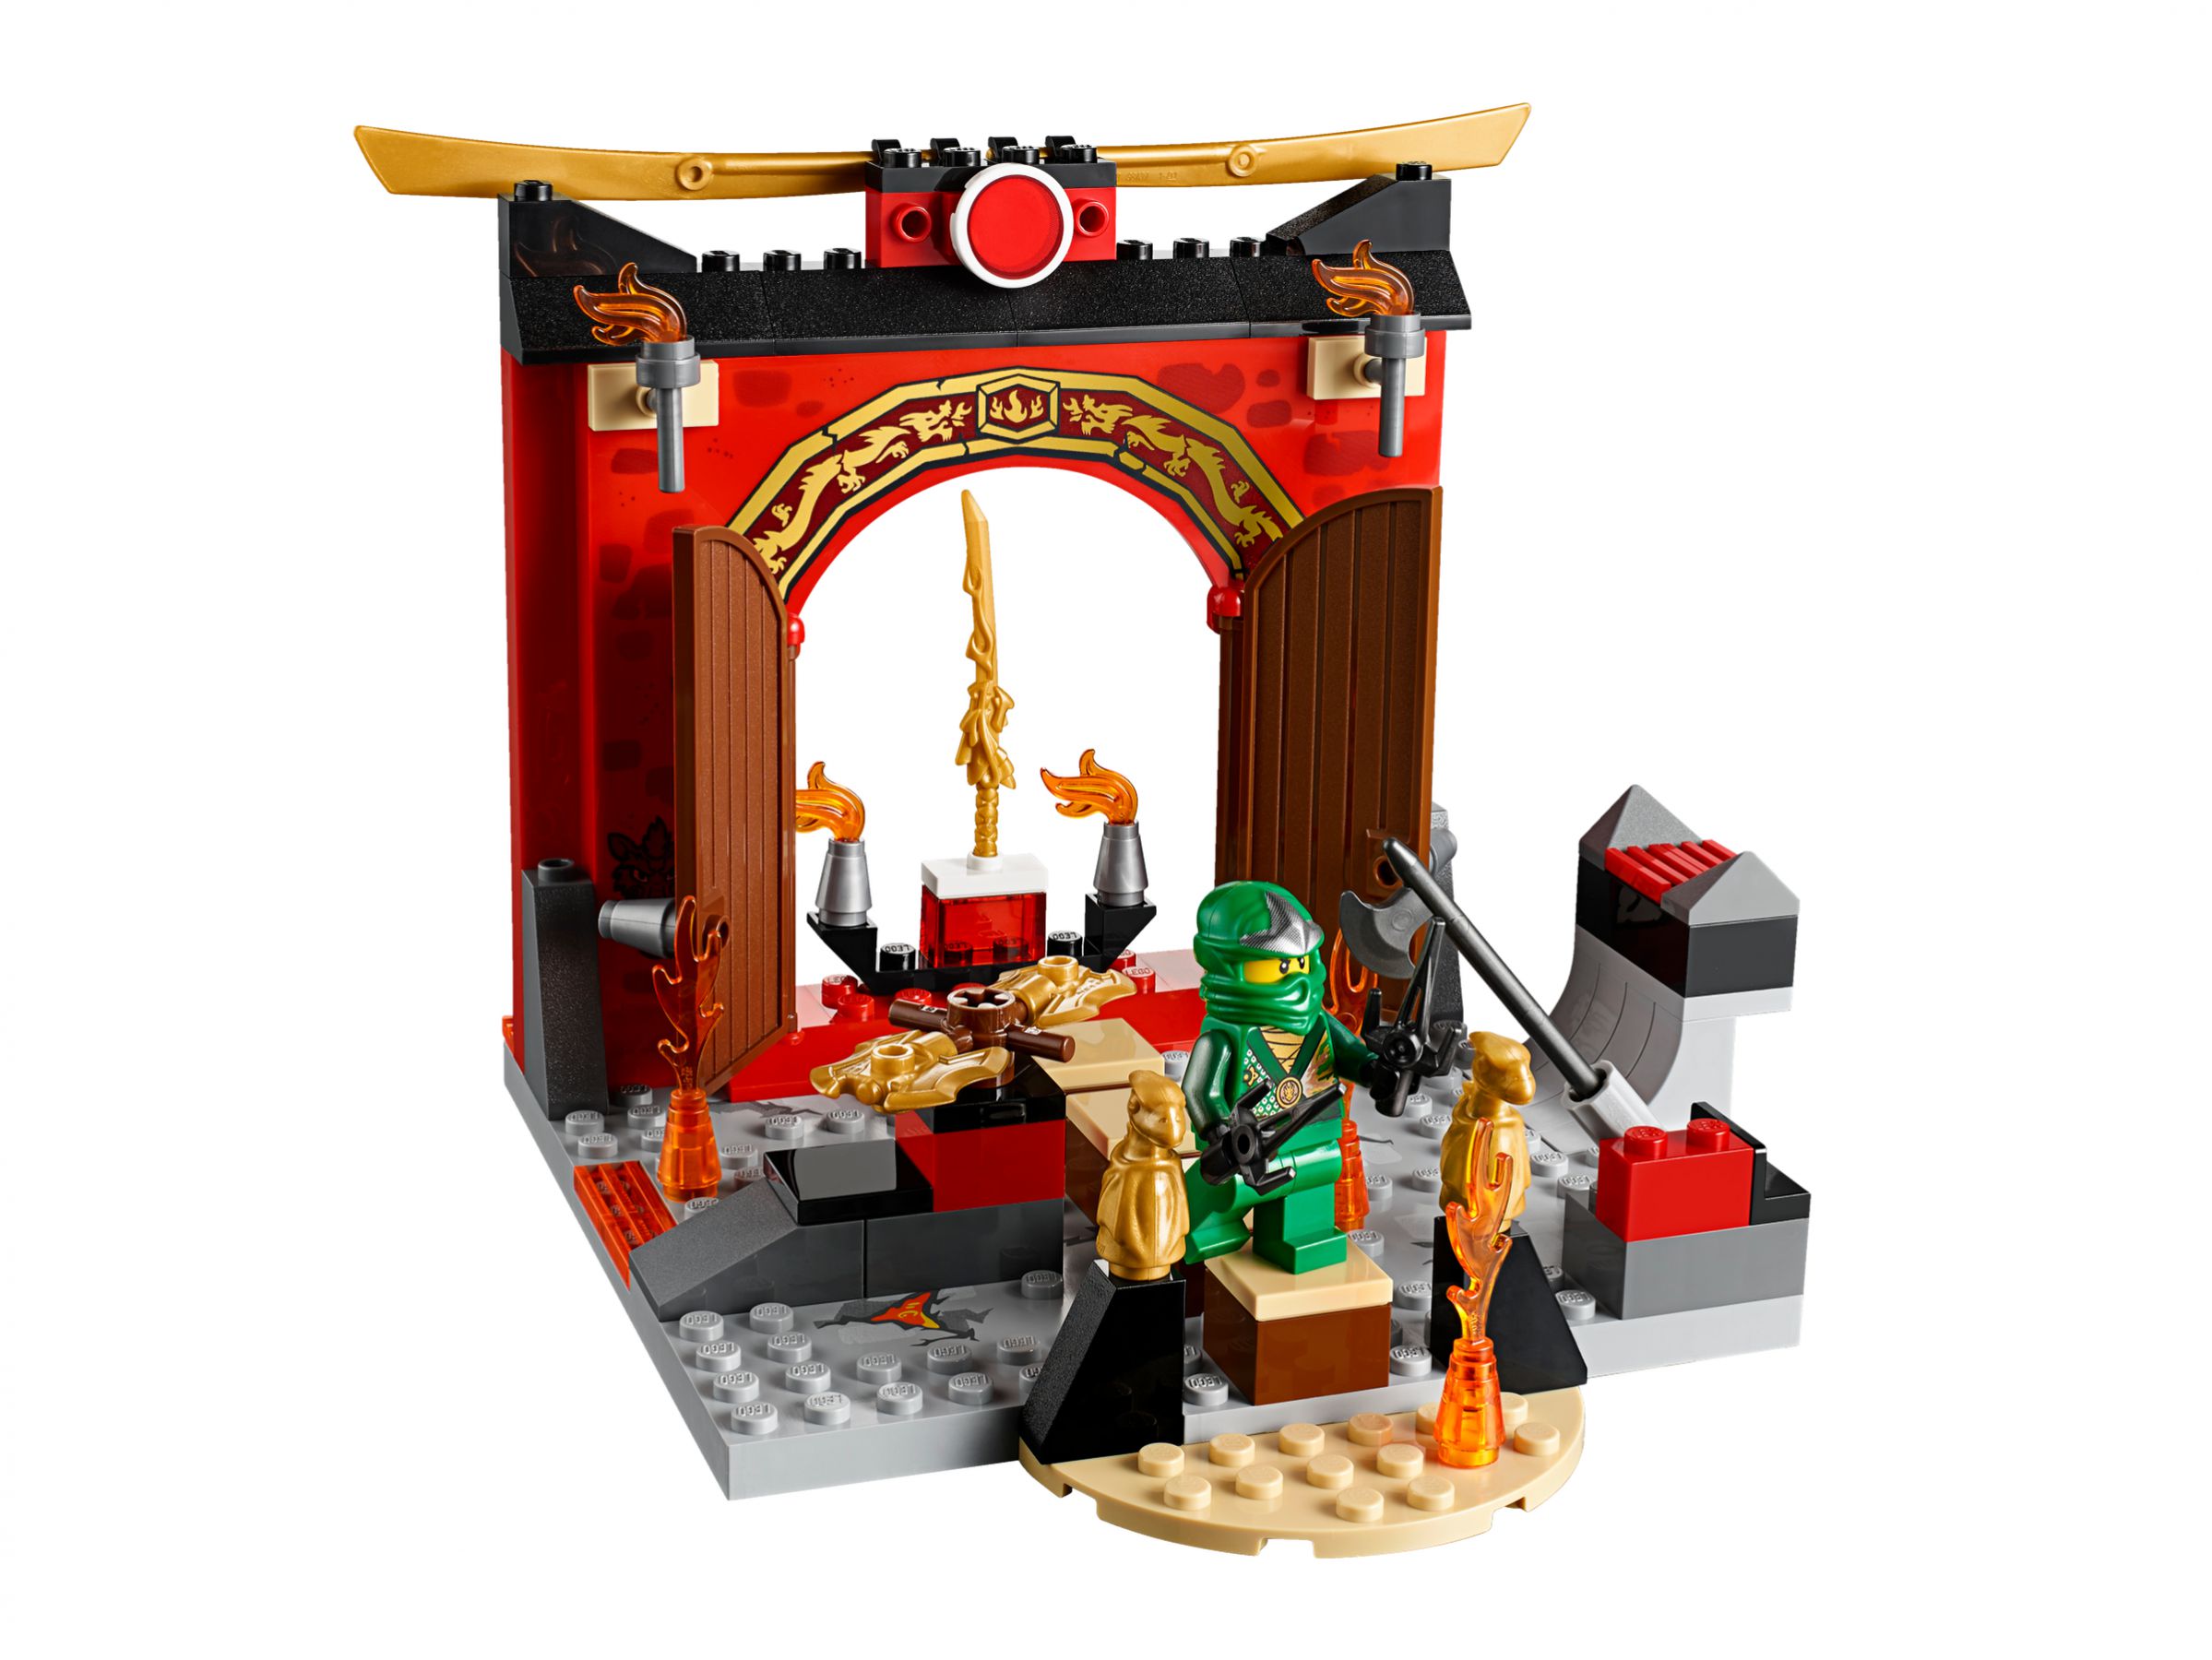 LEGO Juniors 10725 Der verlorene Tempel LEGO_10725_alt3.jpg